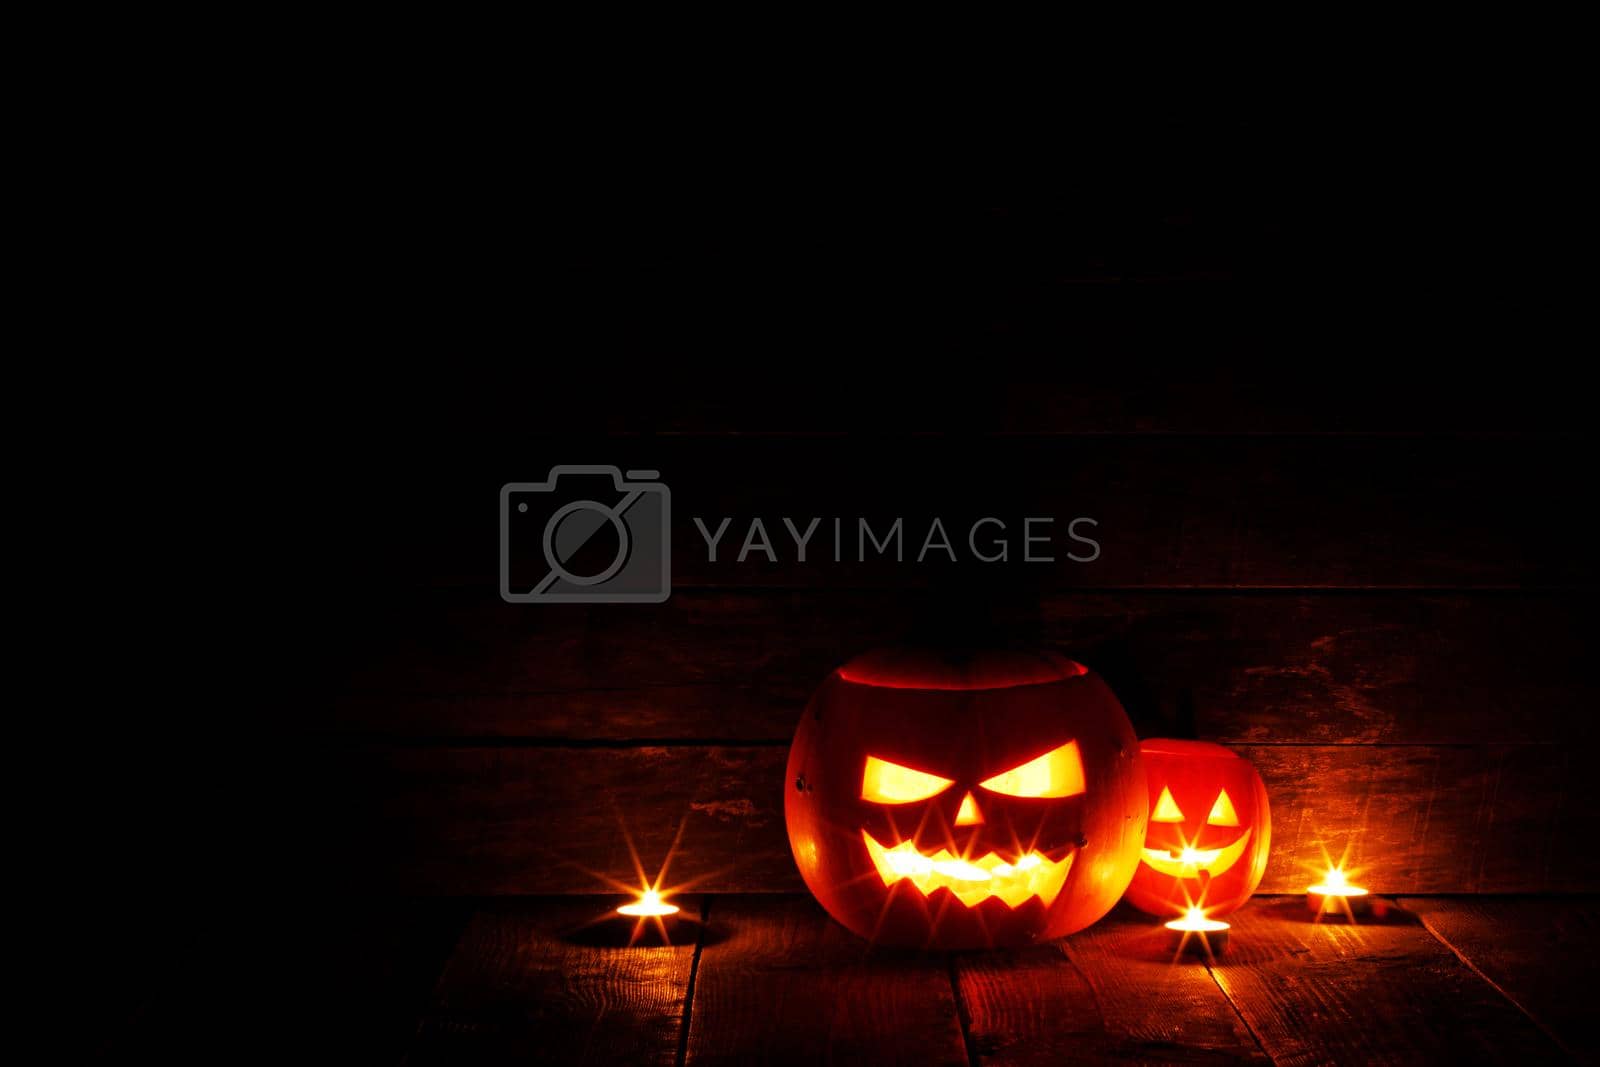 Royalty free image of Halloween lantern pumpkins candles by Yellowj